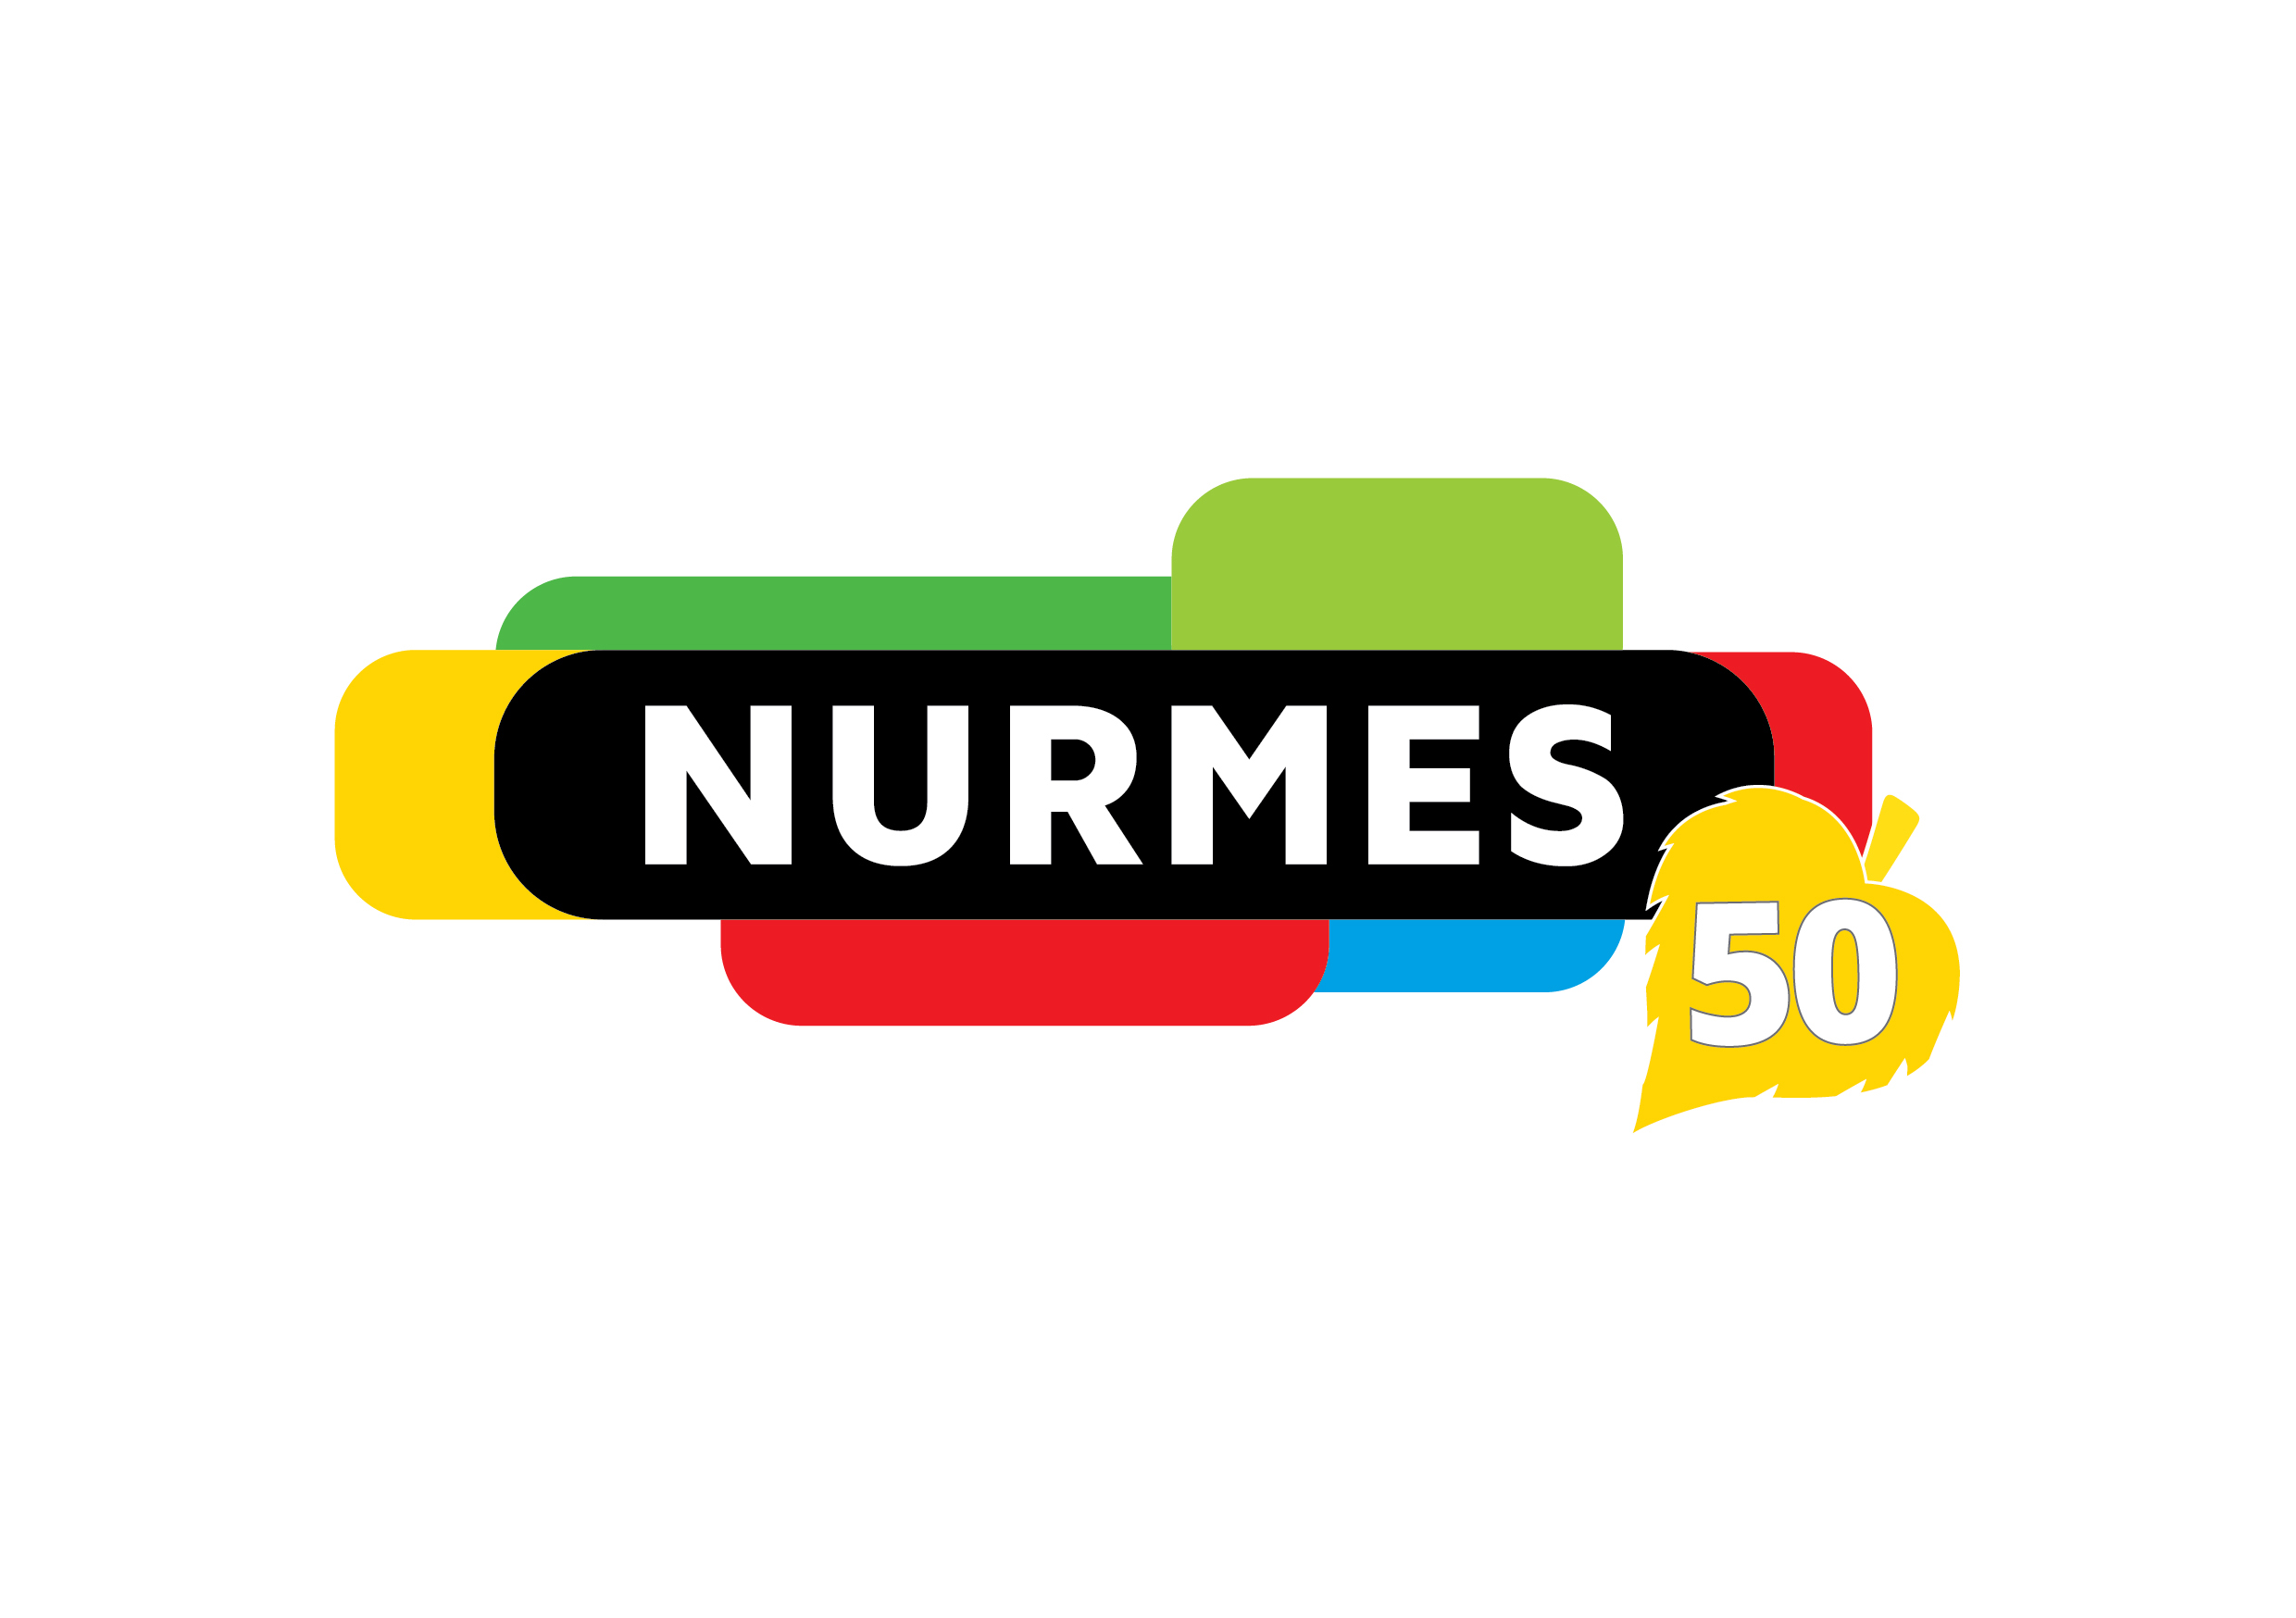 Nurmes-logo 50